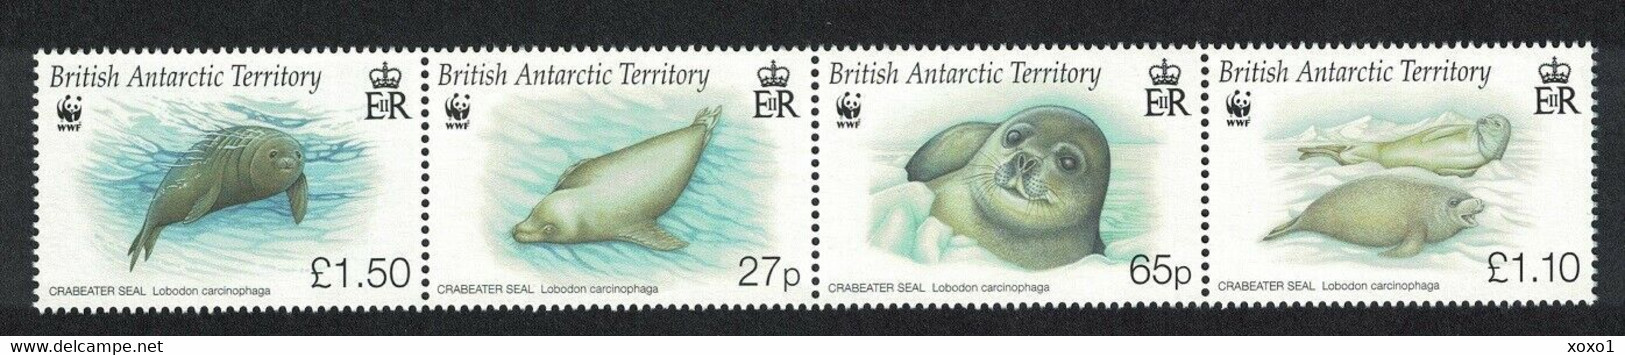 British Antarctic Territory (BAT) 2009 MiNr. 505 - 508 WWF Marine Life Crabeater Seal 4v  MNH**  20.00 € - Nuevos